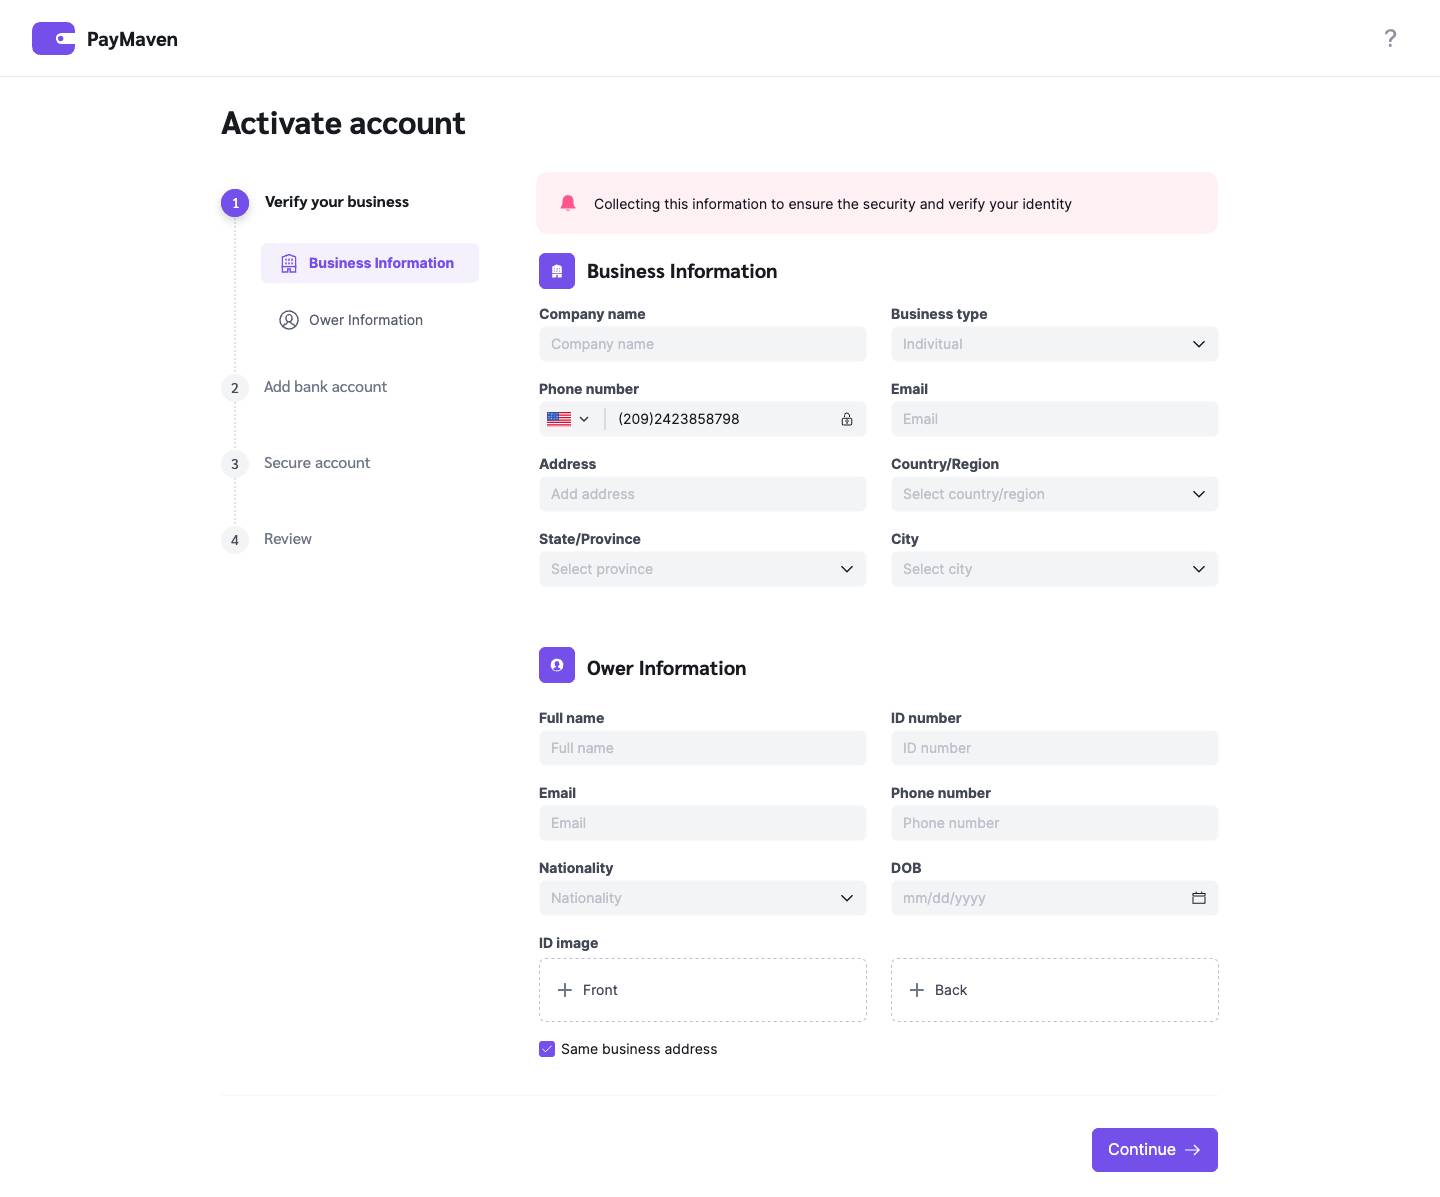 Activate account -  Verify business